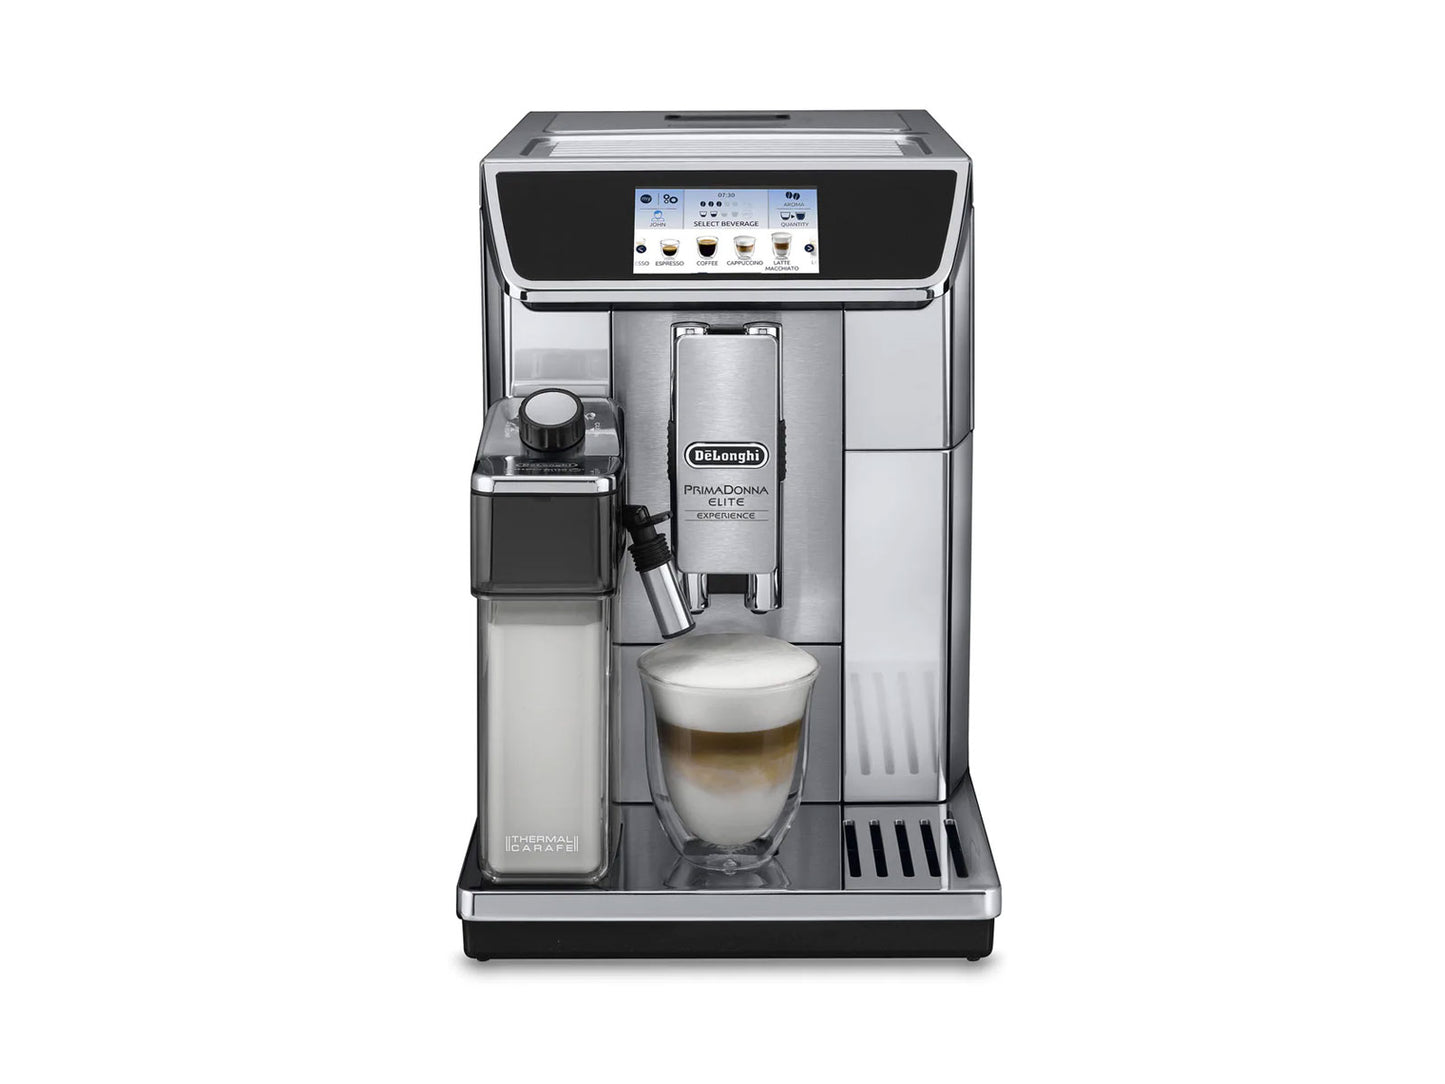 DeLonghi PrimaDonna Elite Fully Automatic Coffee Machine